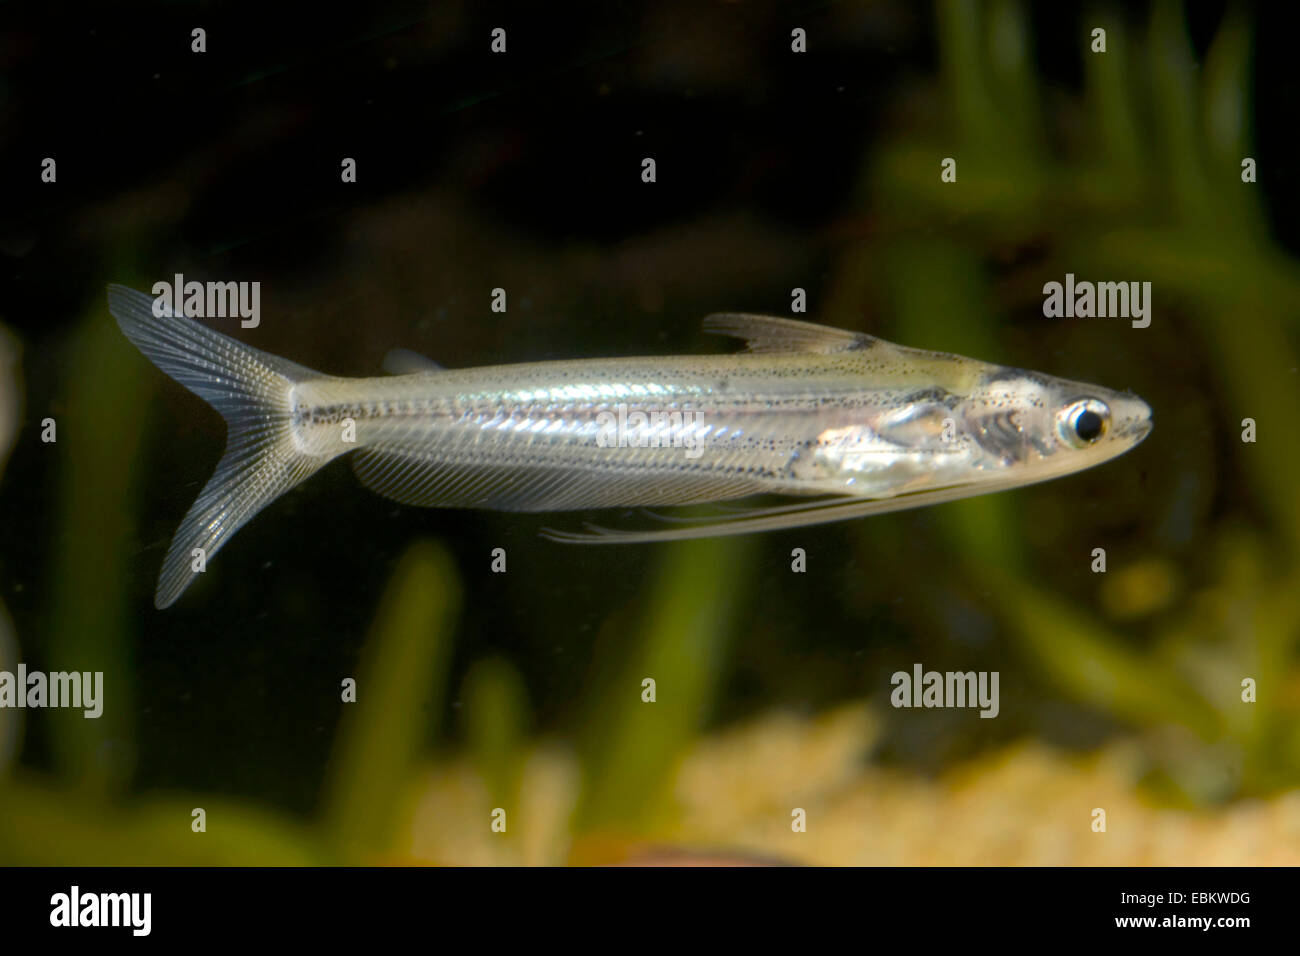 Striped Indian glass catfish (Pseudeutropius atherinoides), full length portrait Stock Photo